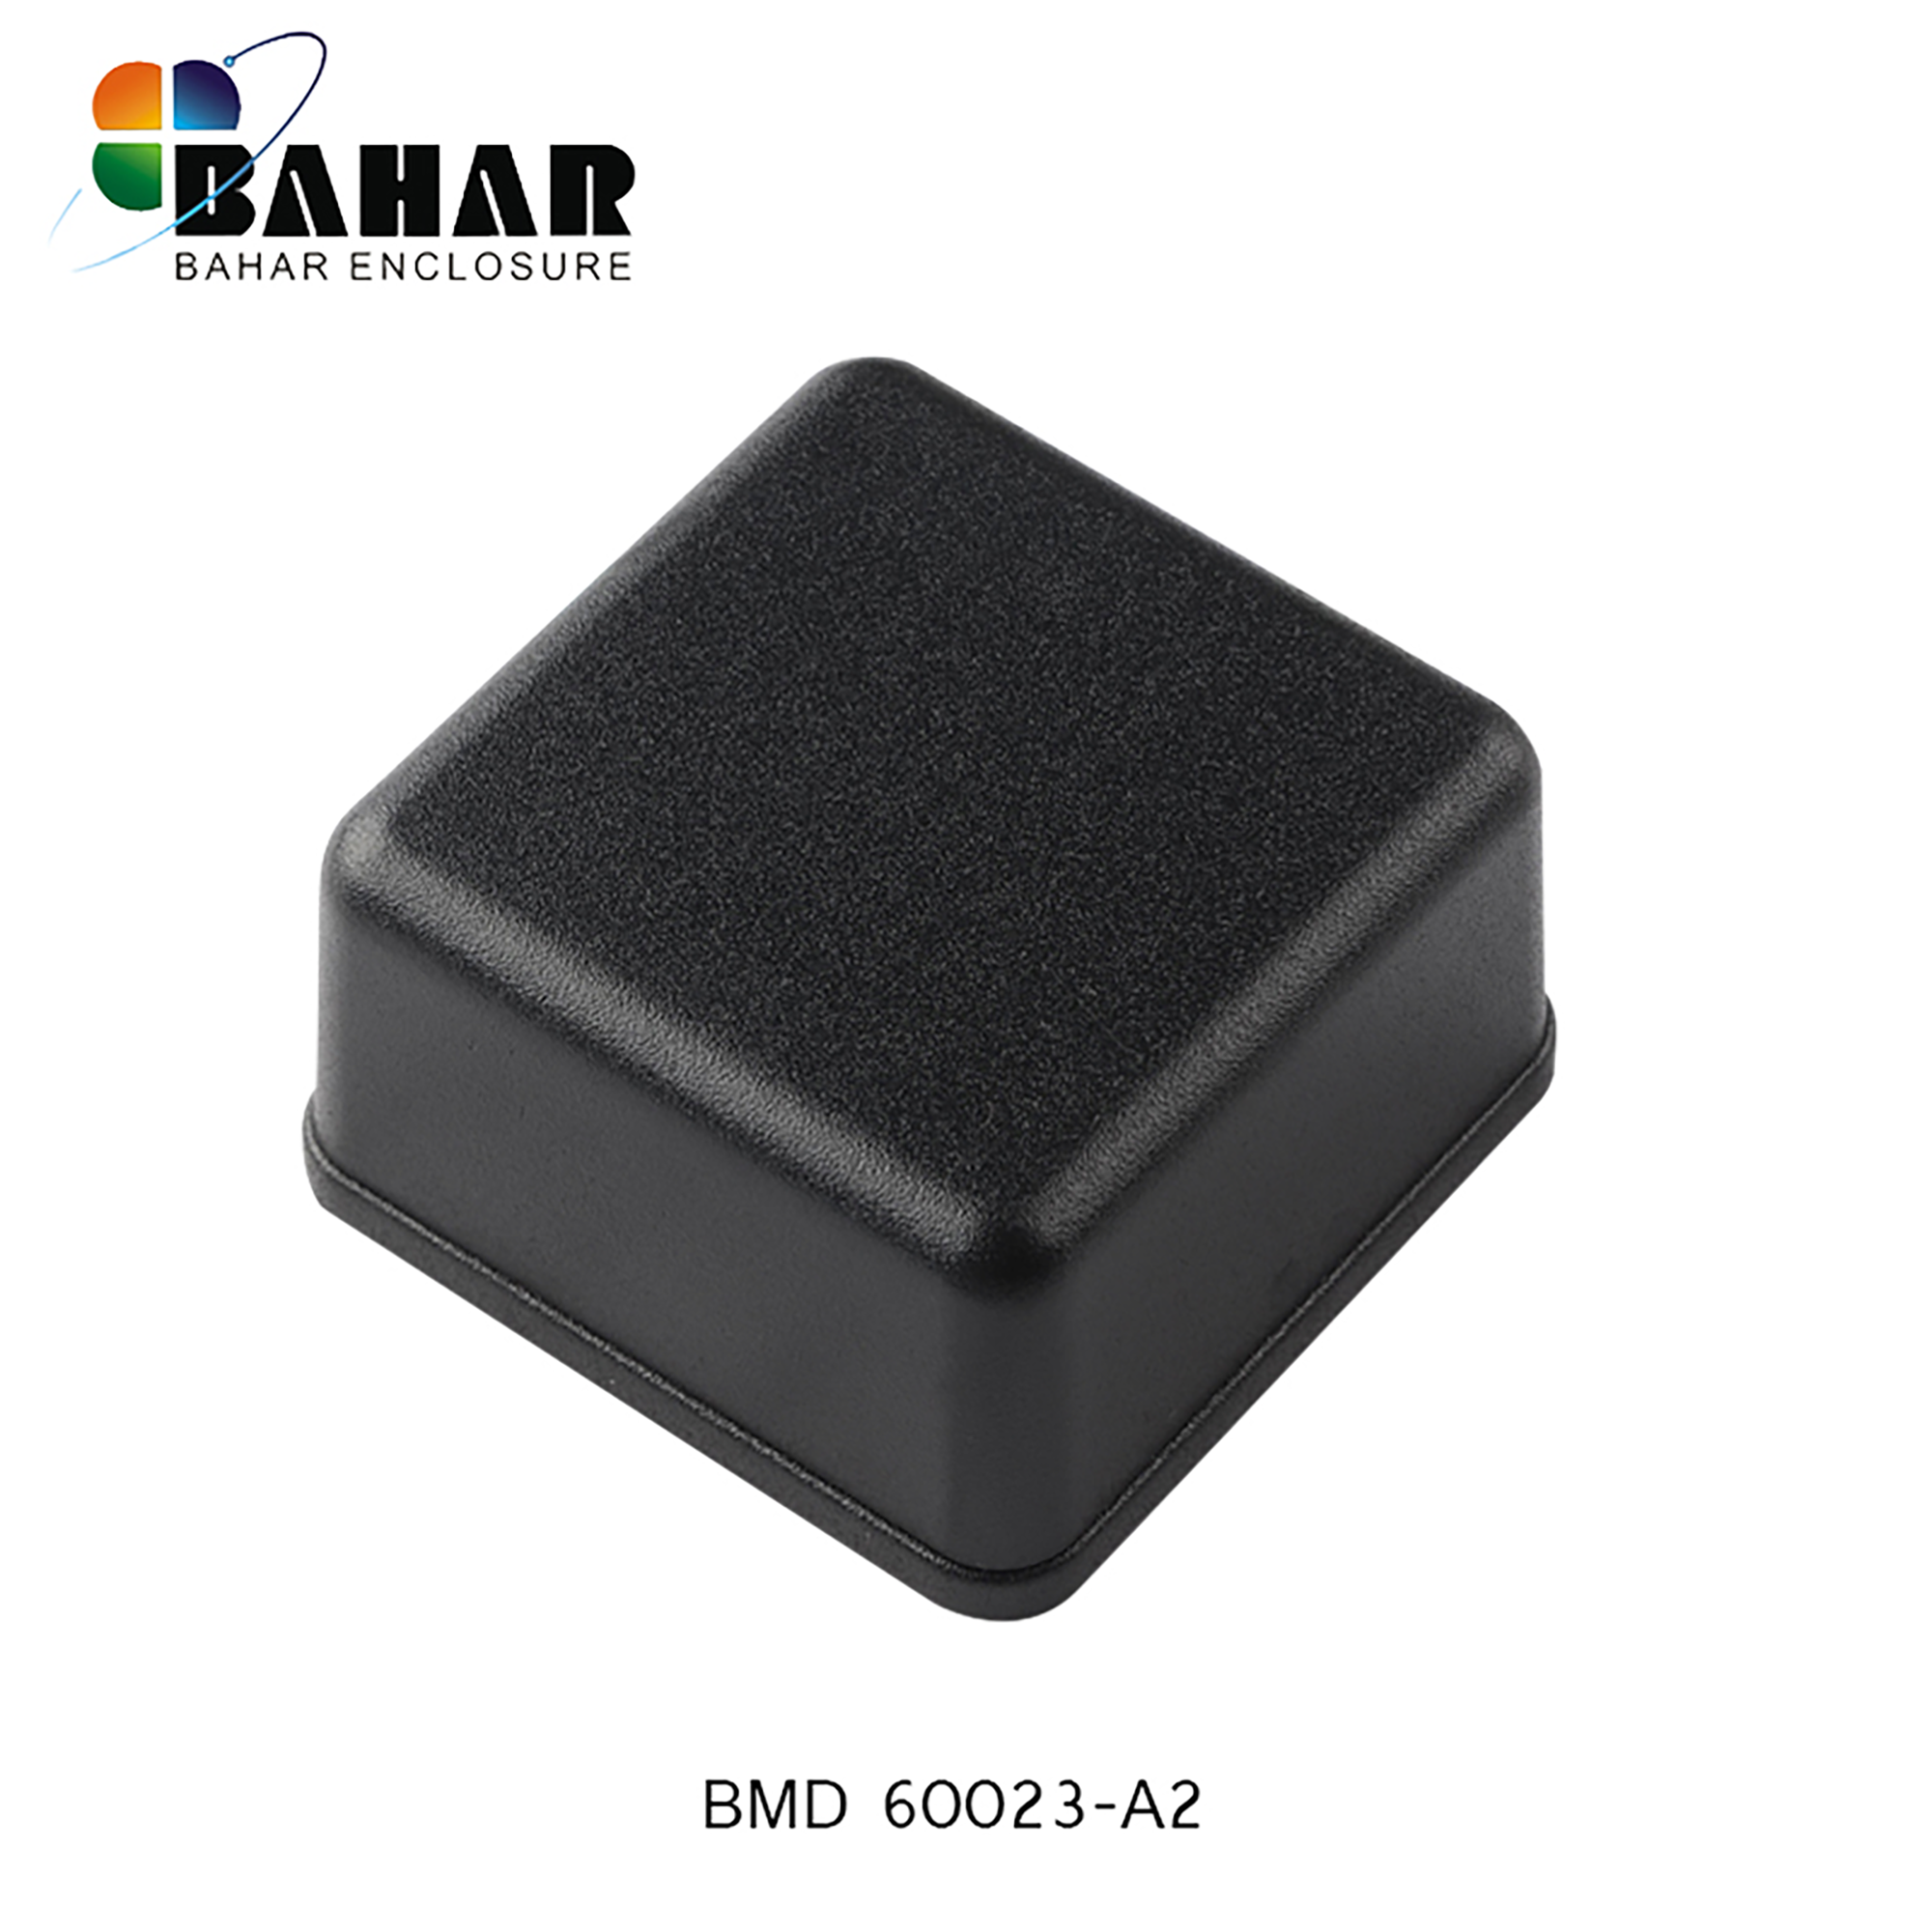 BMD 60023 | 36 x 36 x 20 mm